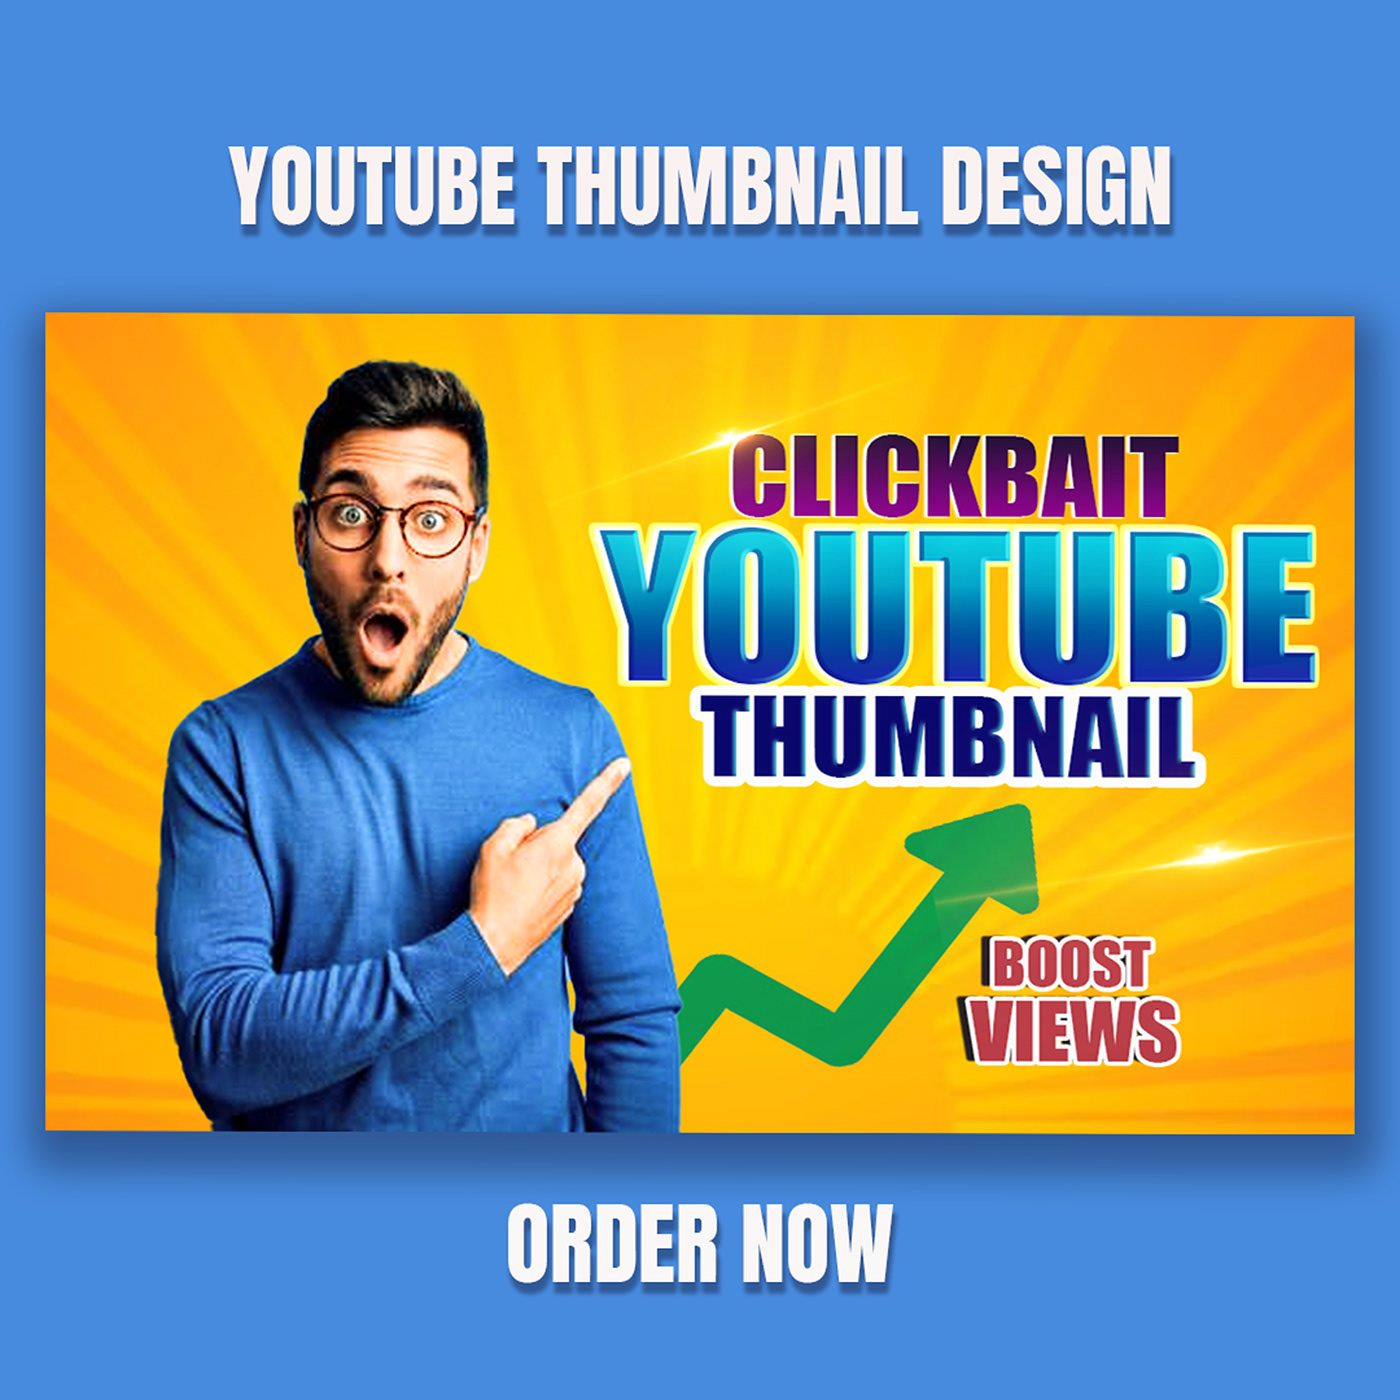 You tube Thumbnails design